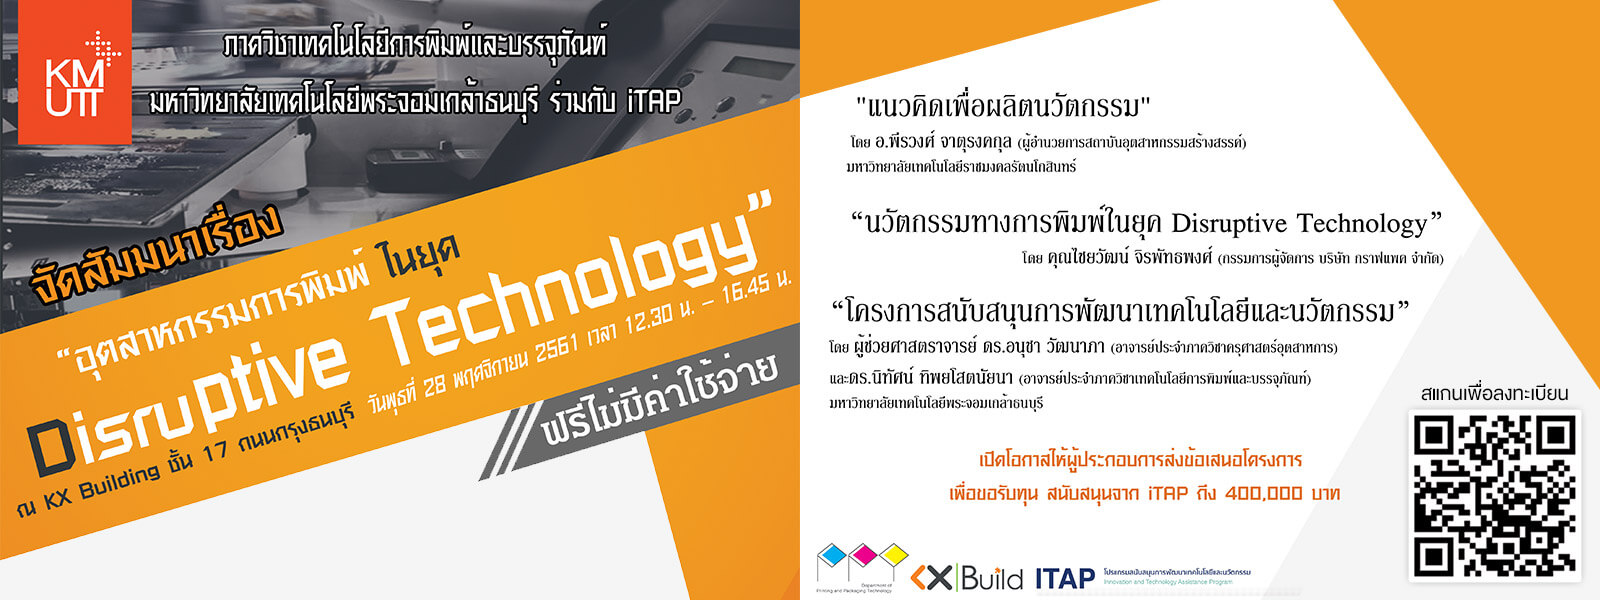 20181101_seminar-disruptive-technology_1600x600-01